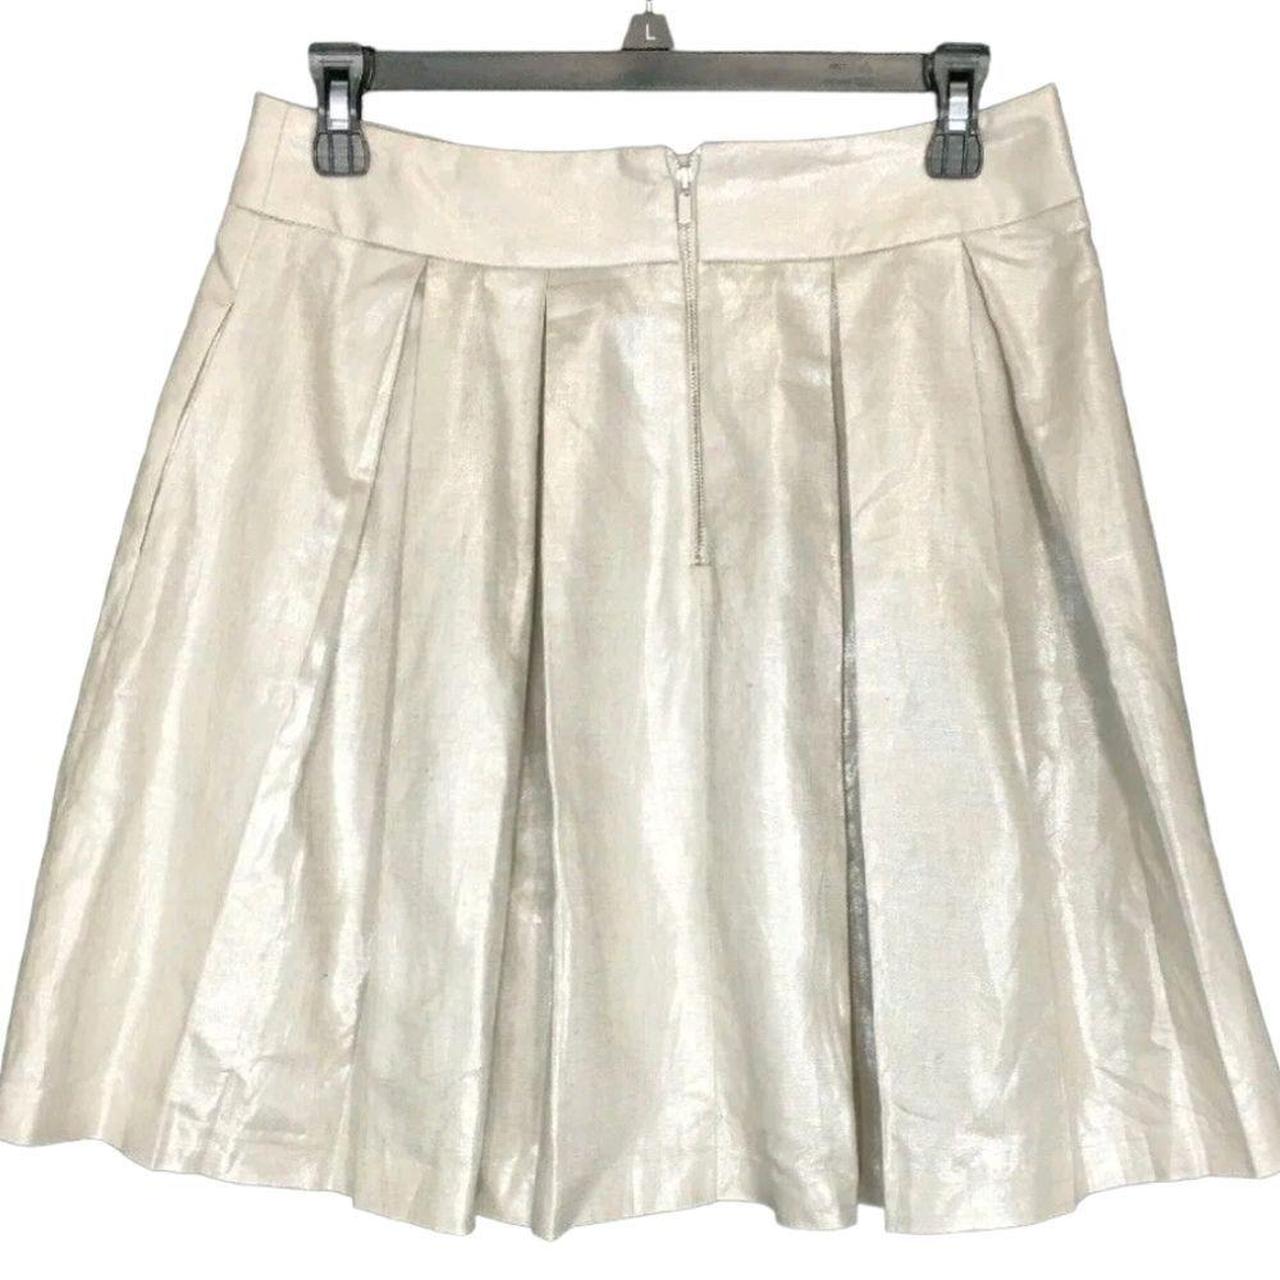 Banana Republic Skirt Pleated Cream Foil Shiny Lined... - Depop